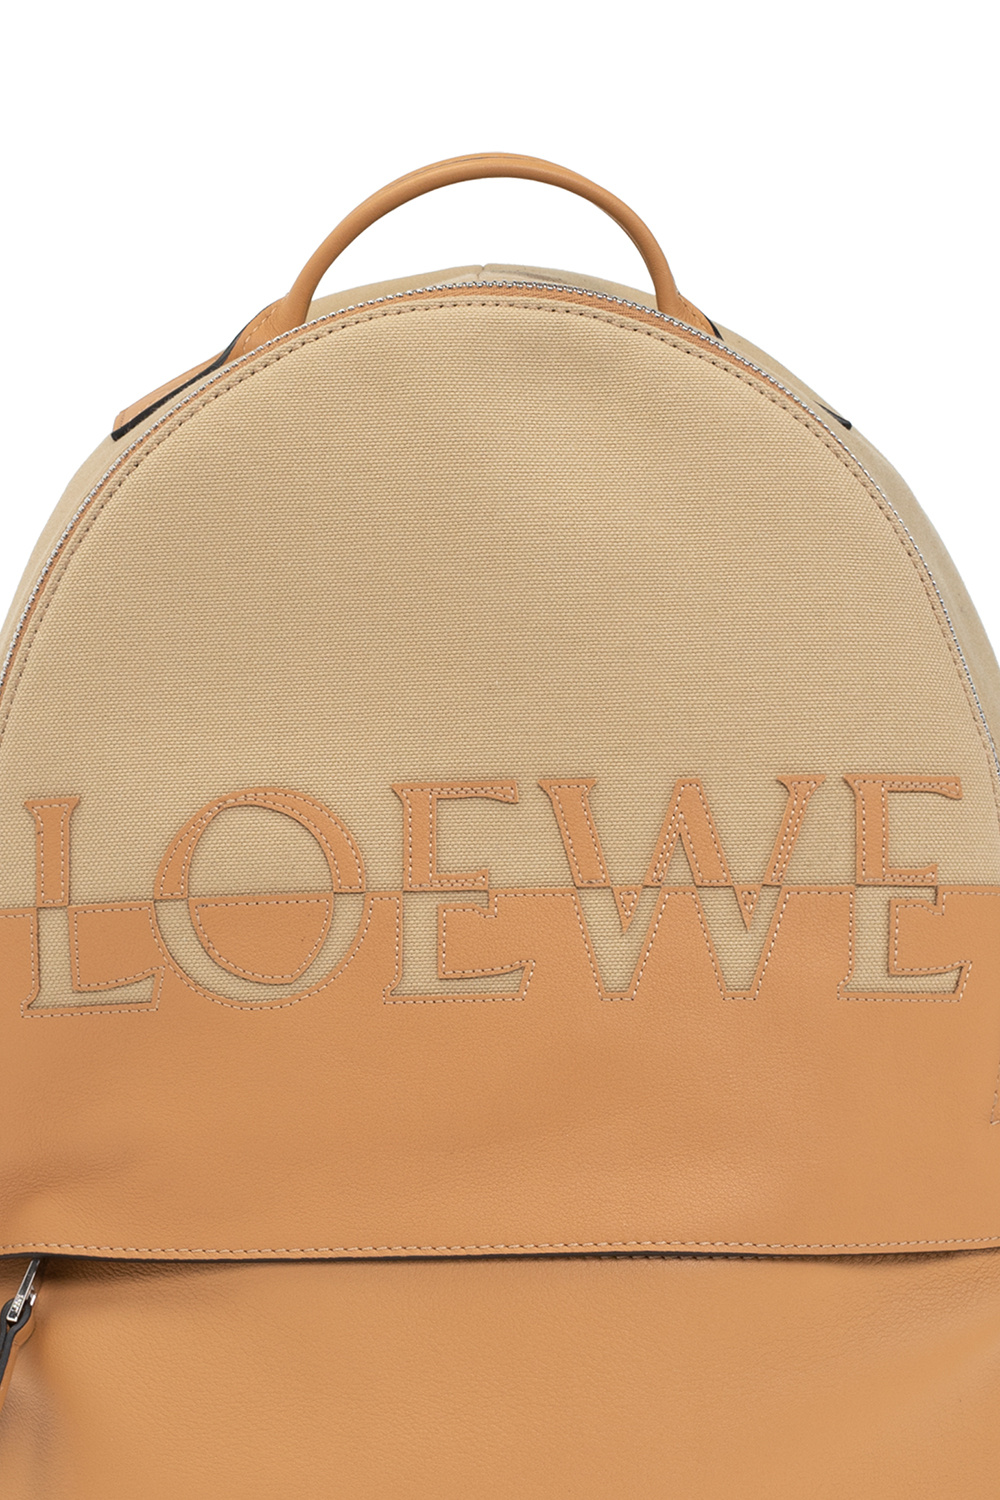 Loewe pouch with logo loewe bag black